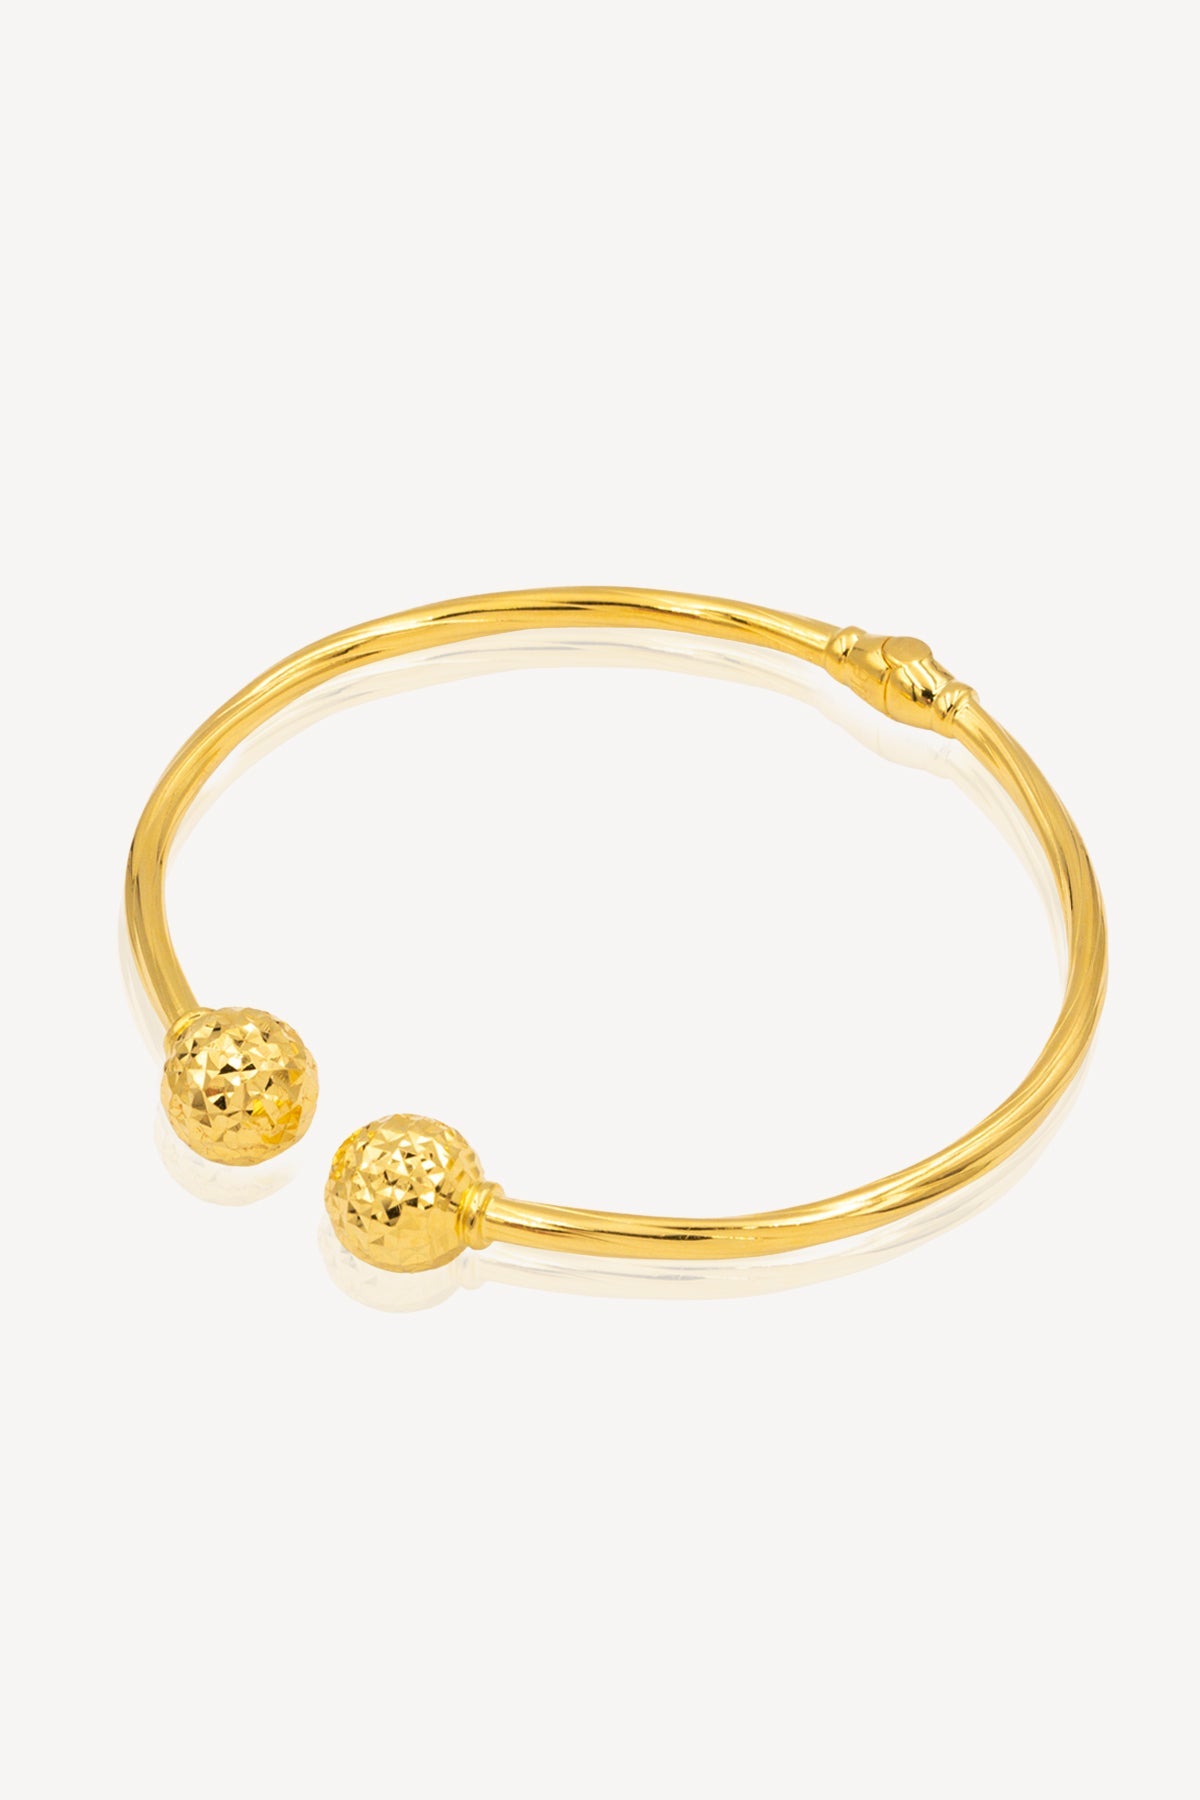 Gold Bangles | JJ Gold Jewellery